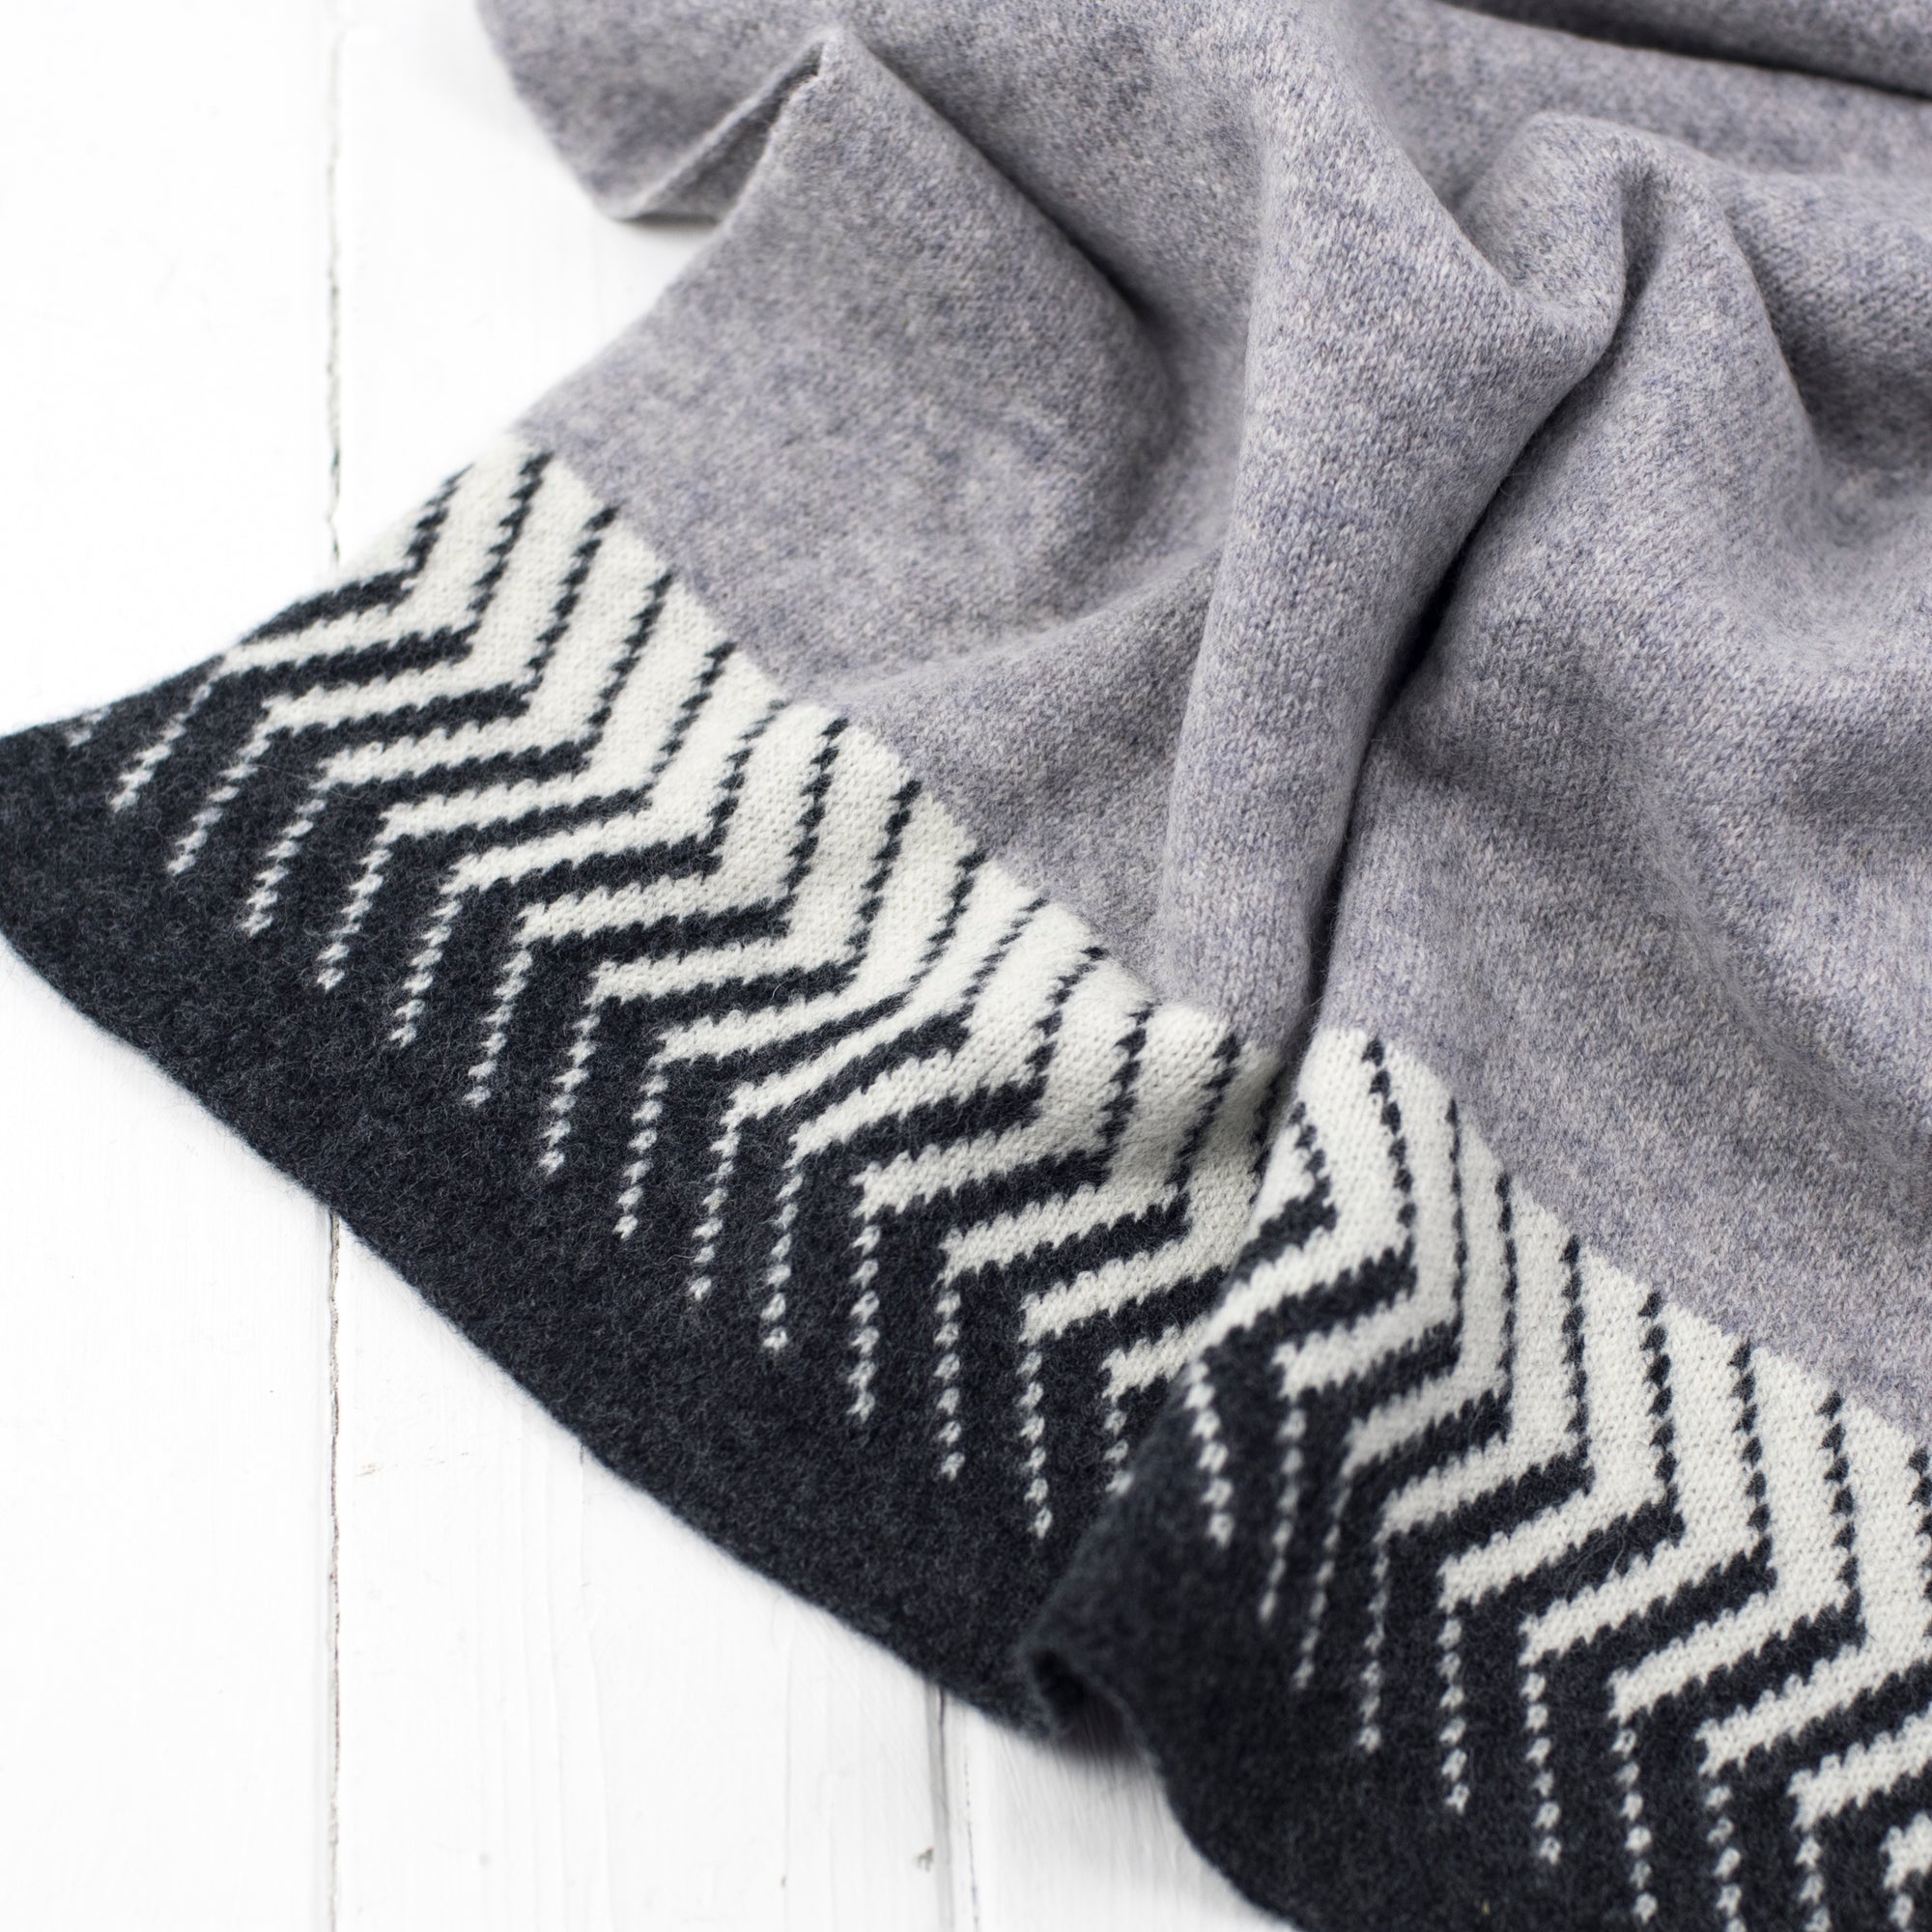 Chevron knitted wrap - monochrome